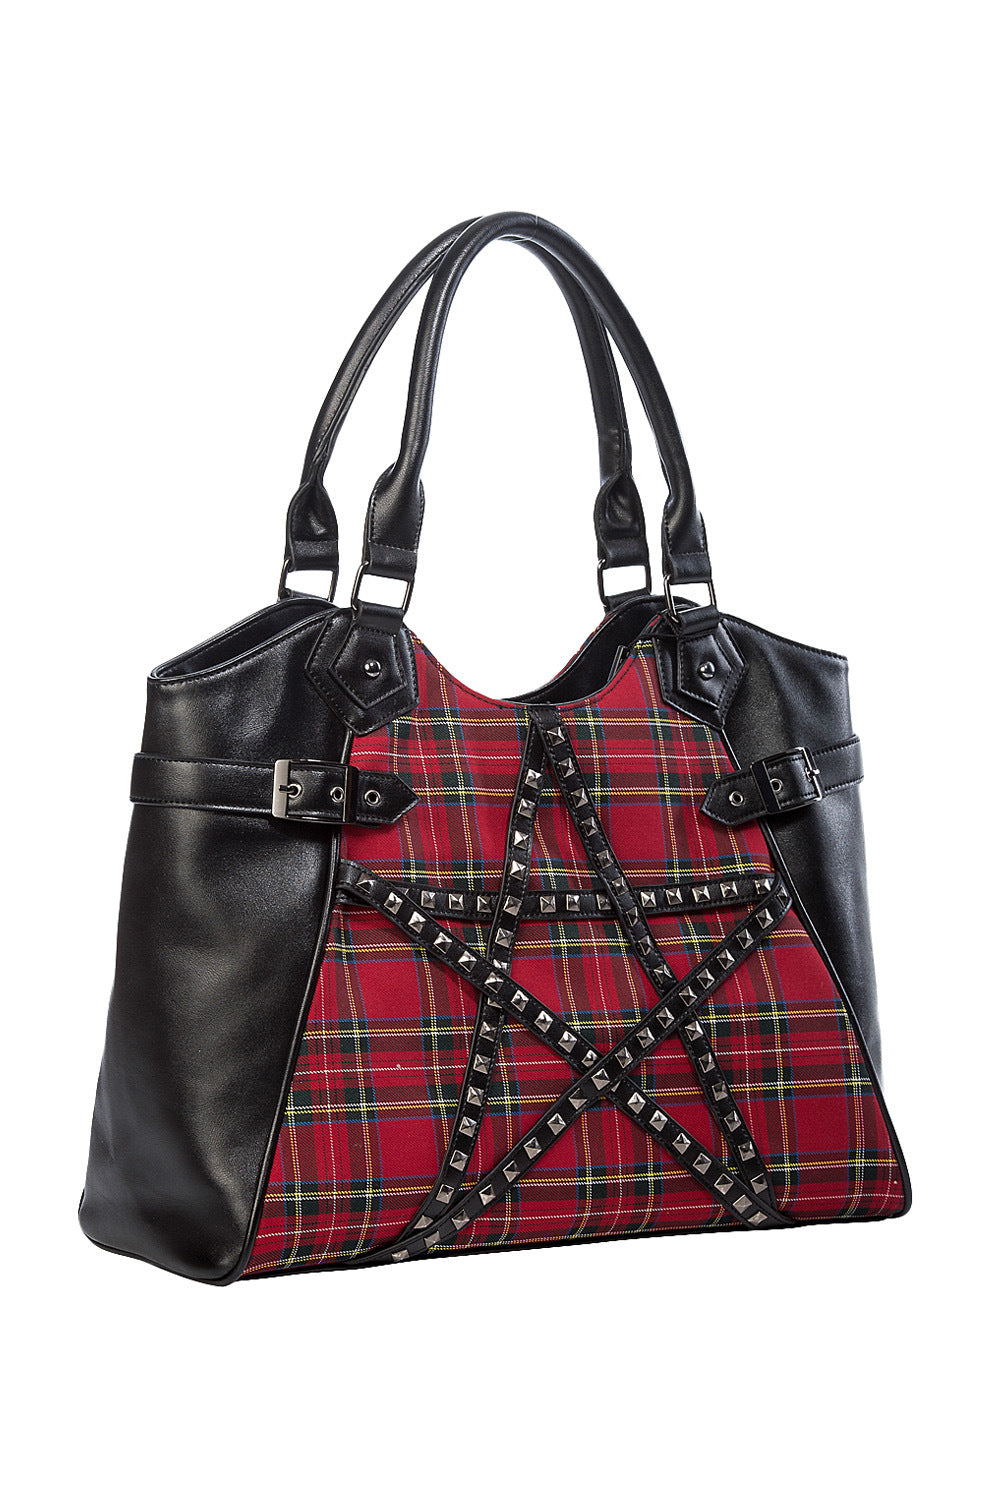 Black handbag with studded pentagram front with red tartan